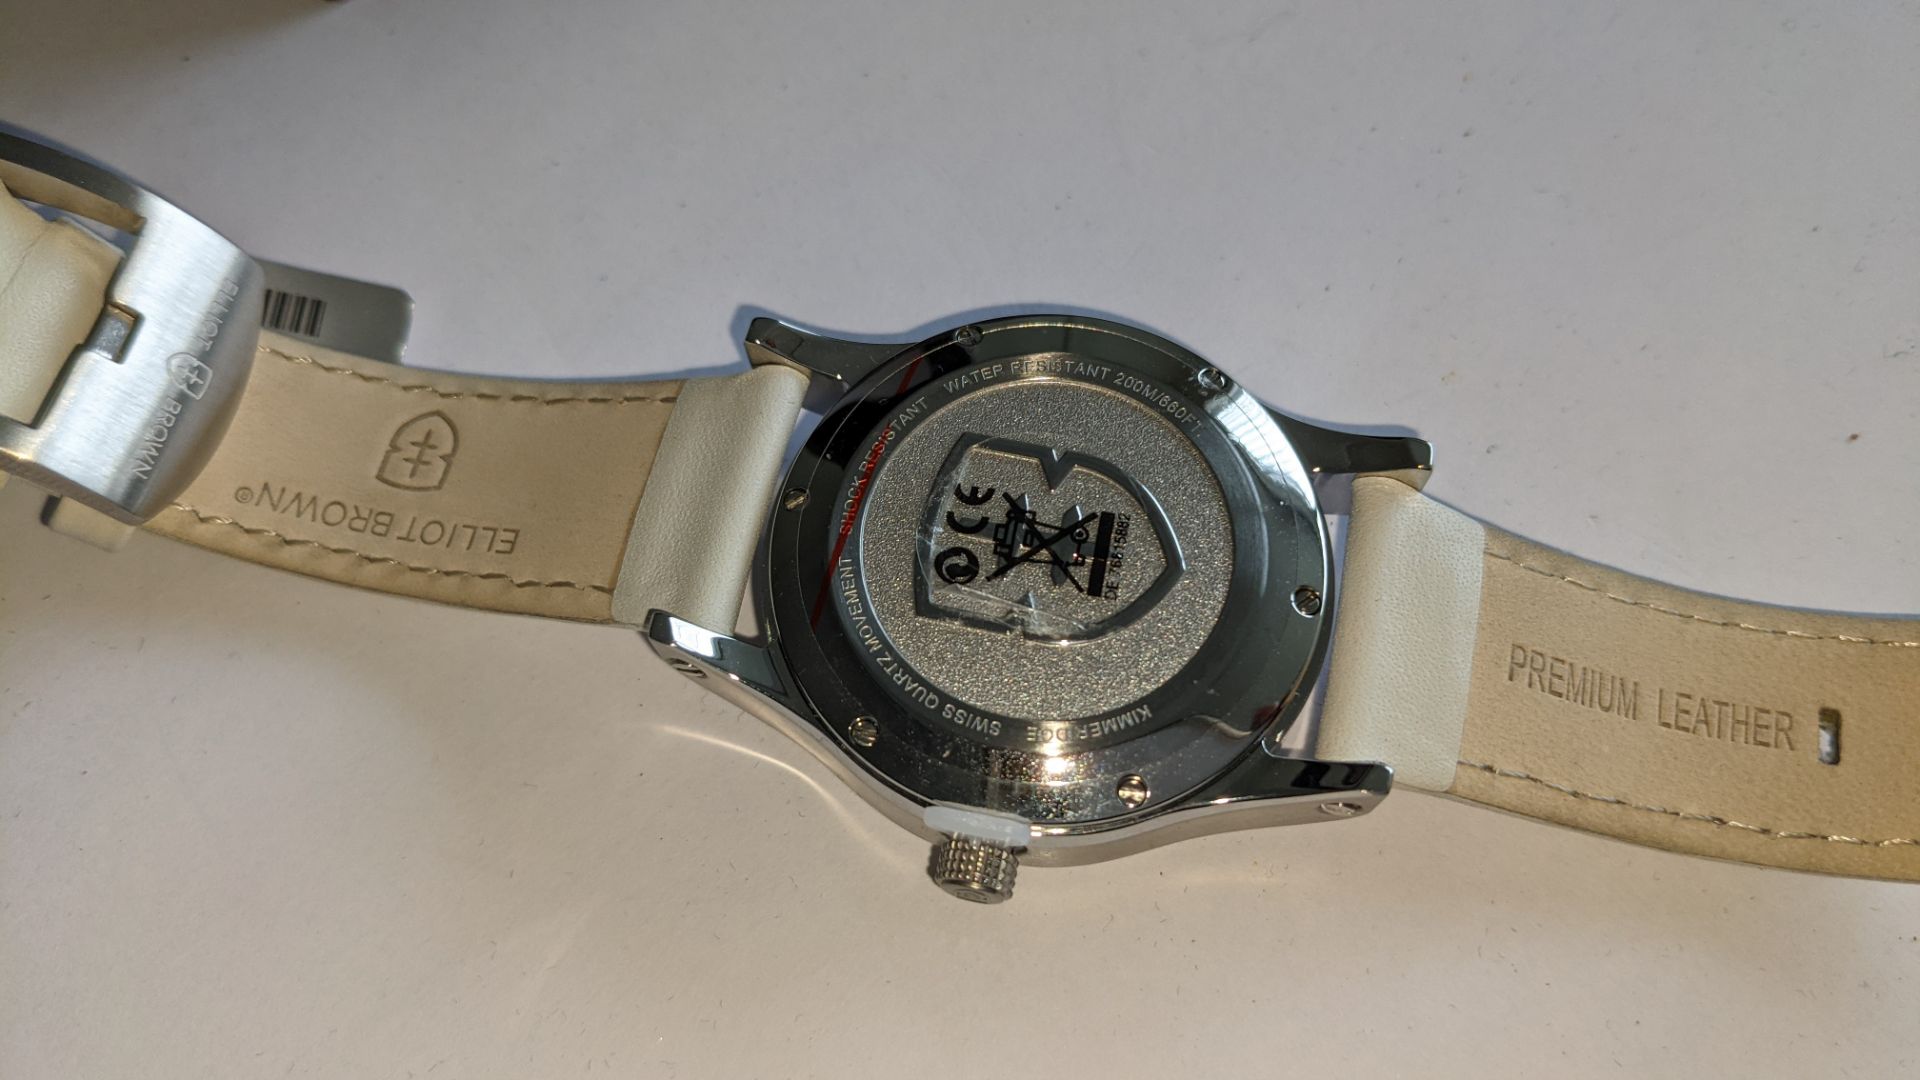 Elliot Brown The Kimmeridge watch, product code 405-008-L54. Stainless steel, 200M water resistant, - Image 11 of 18